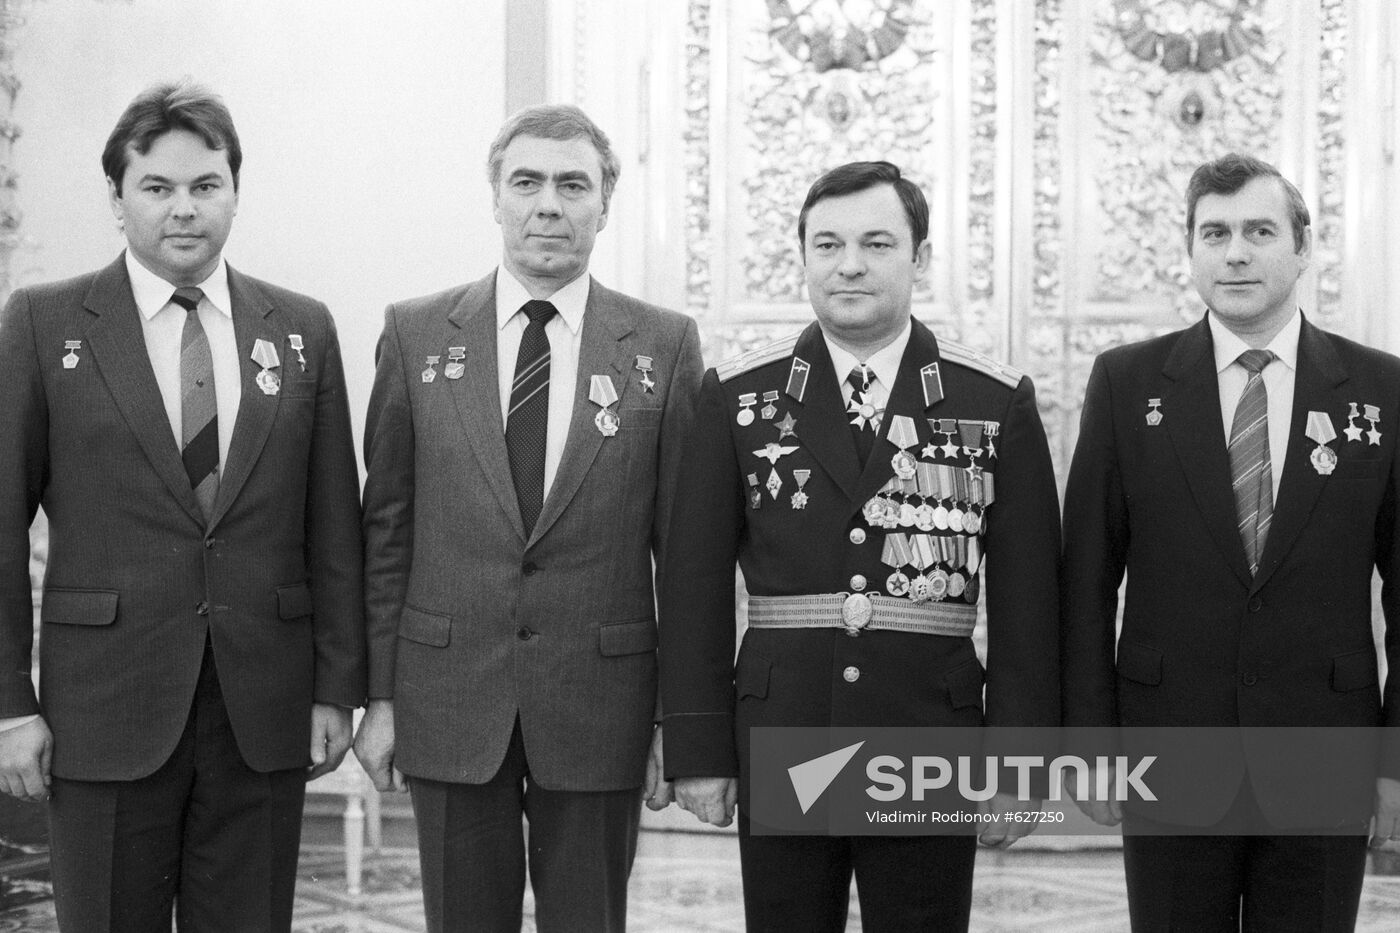 A. Laveikin, A. Levchenko, Y. Romanenko, A. Alexandrov